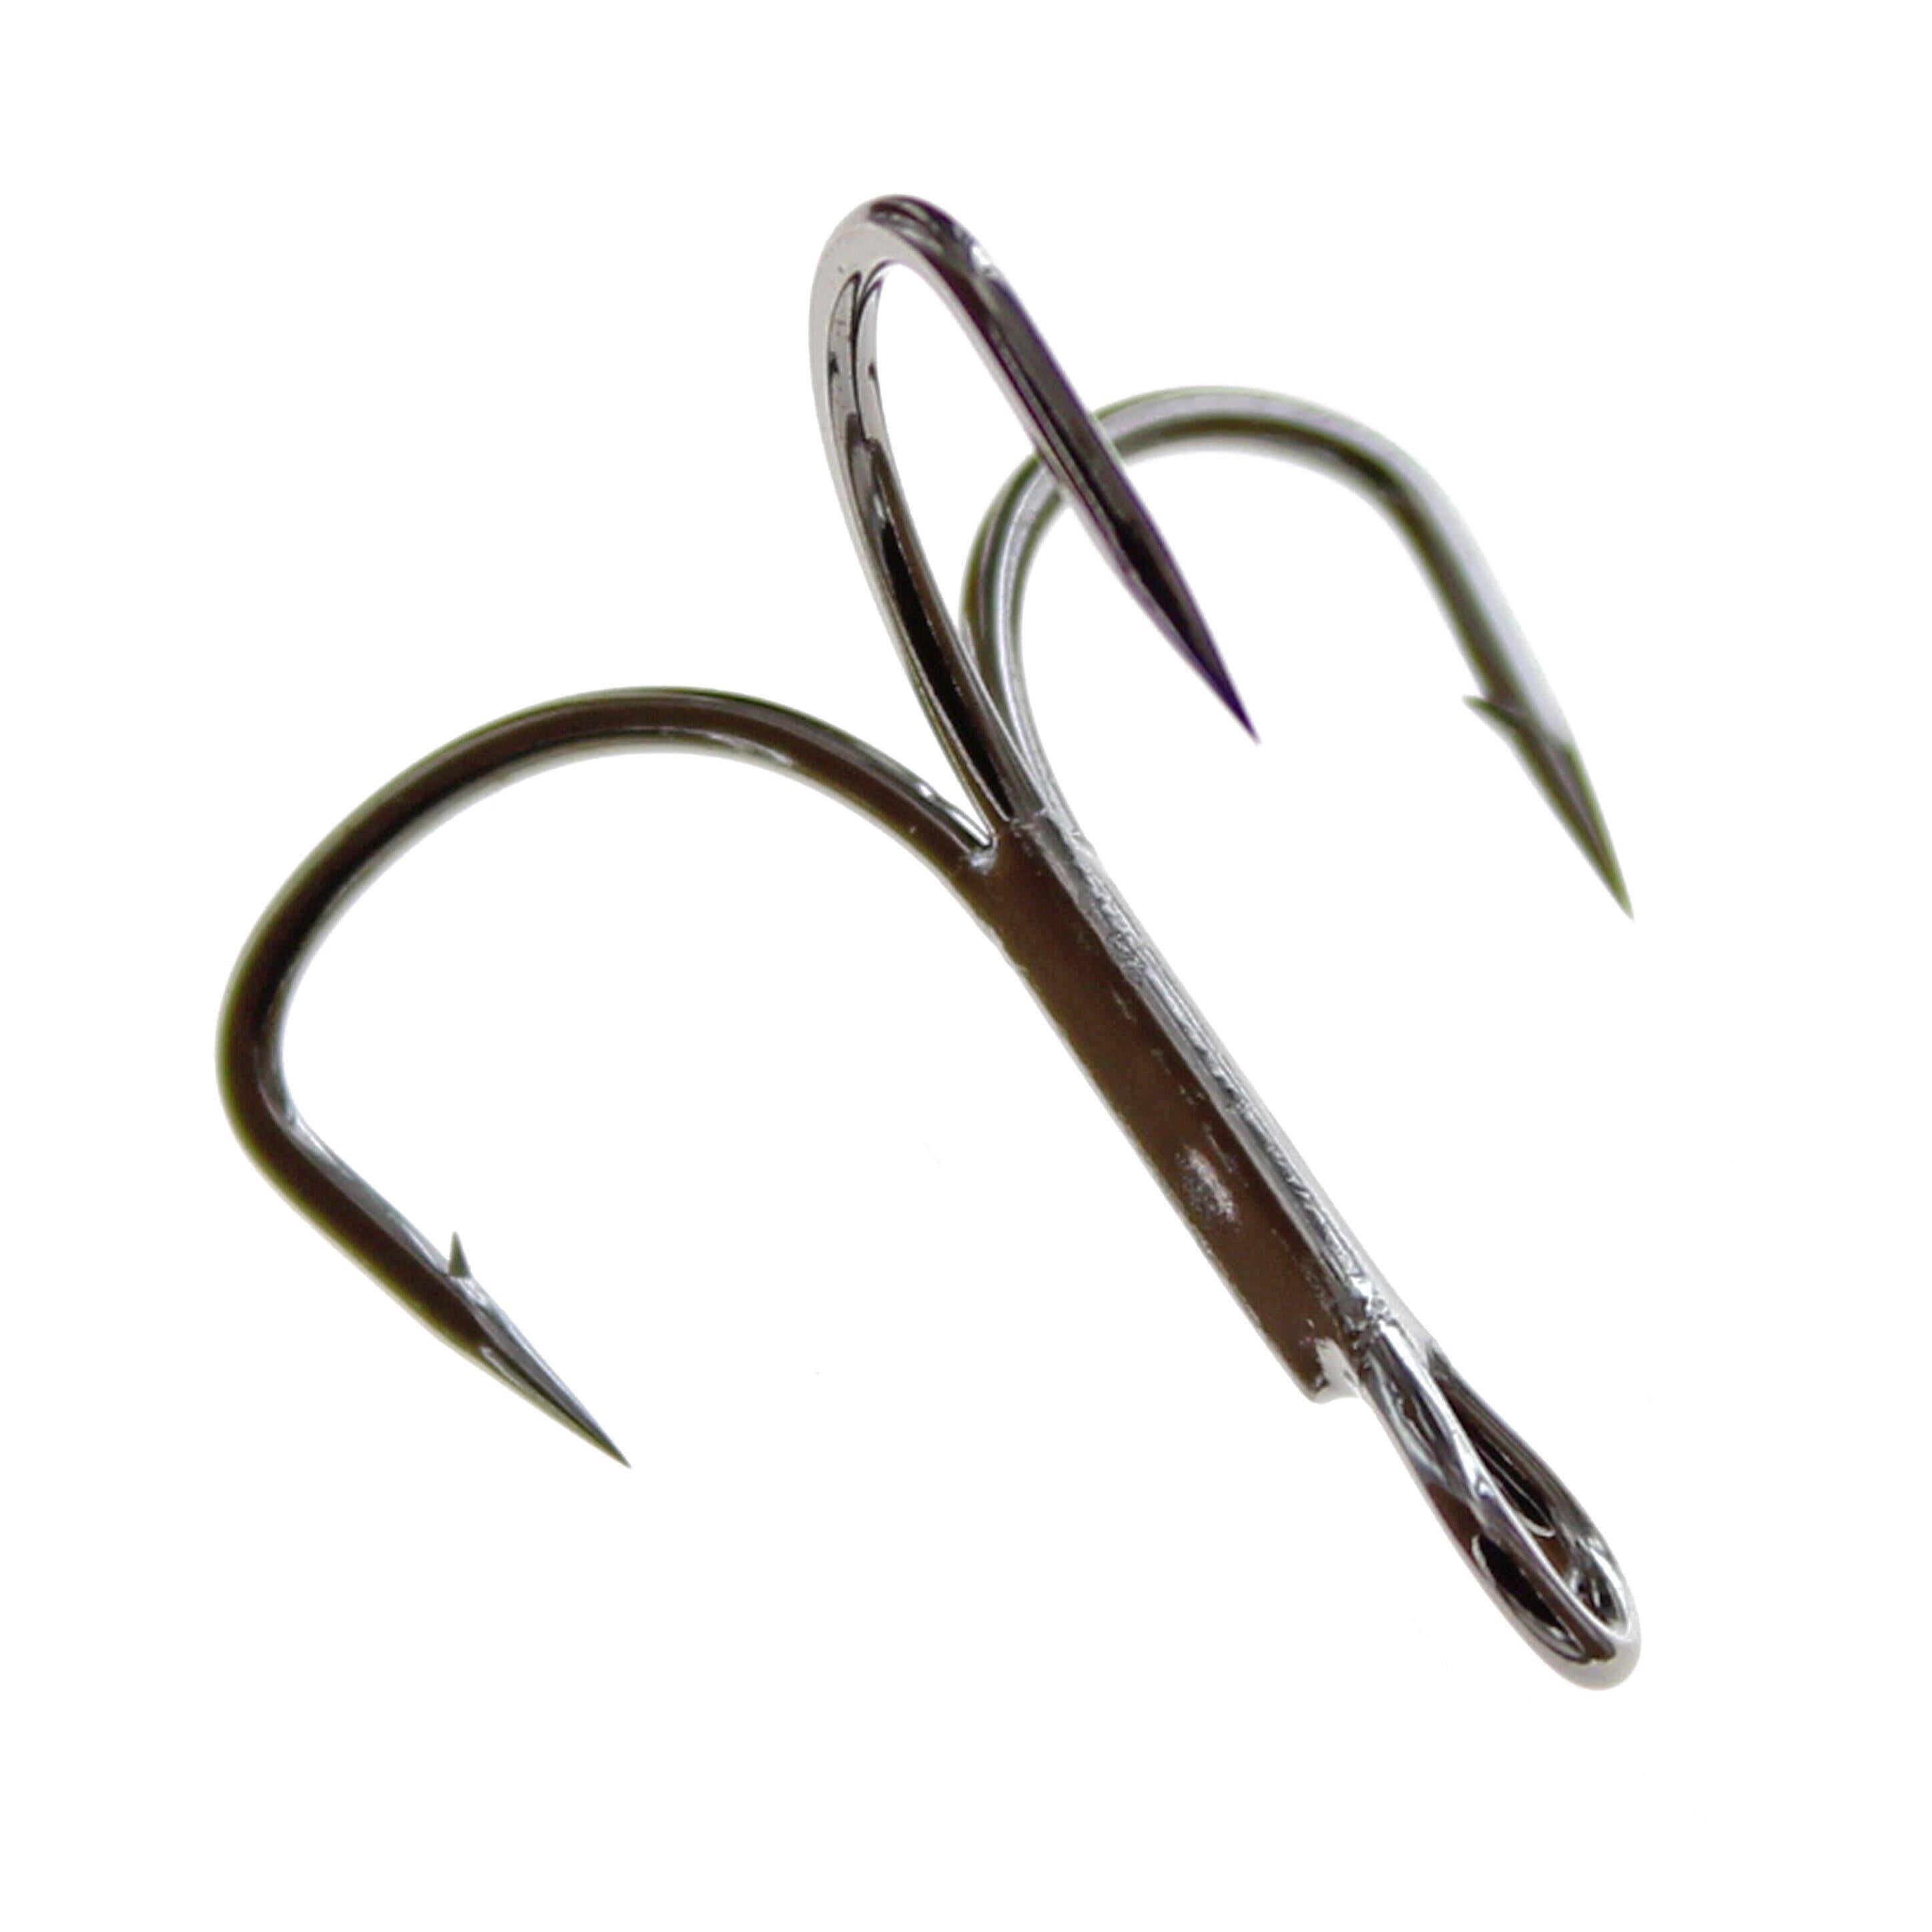 Gamakatsu Round Bend Barbless Treble Hooks - Size 4 